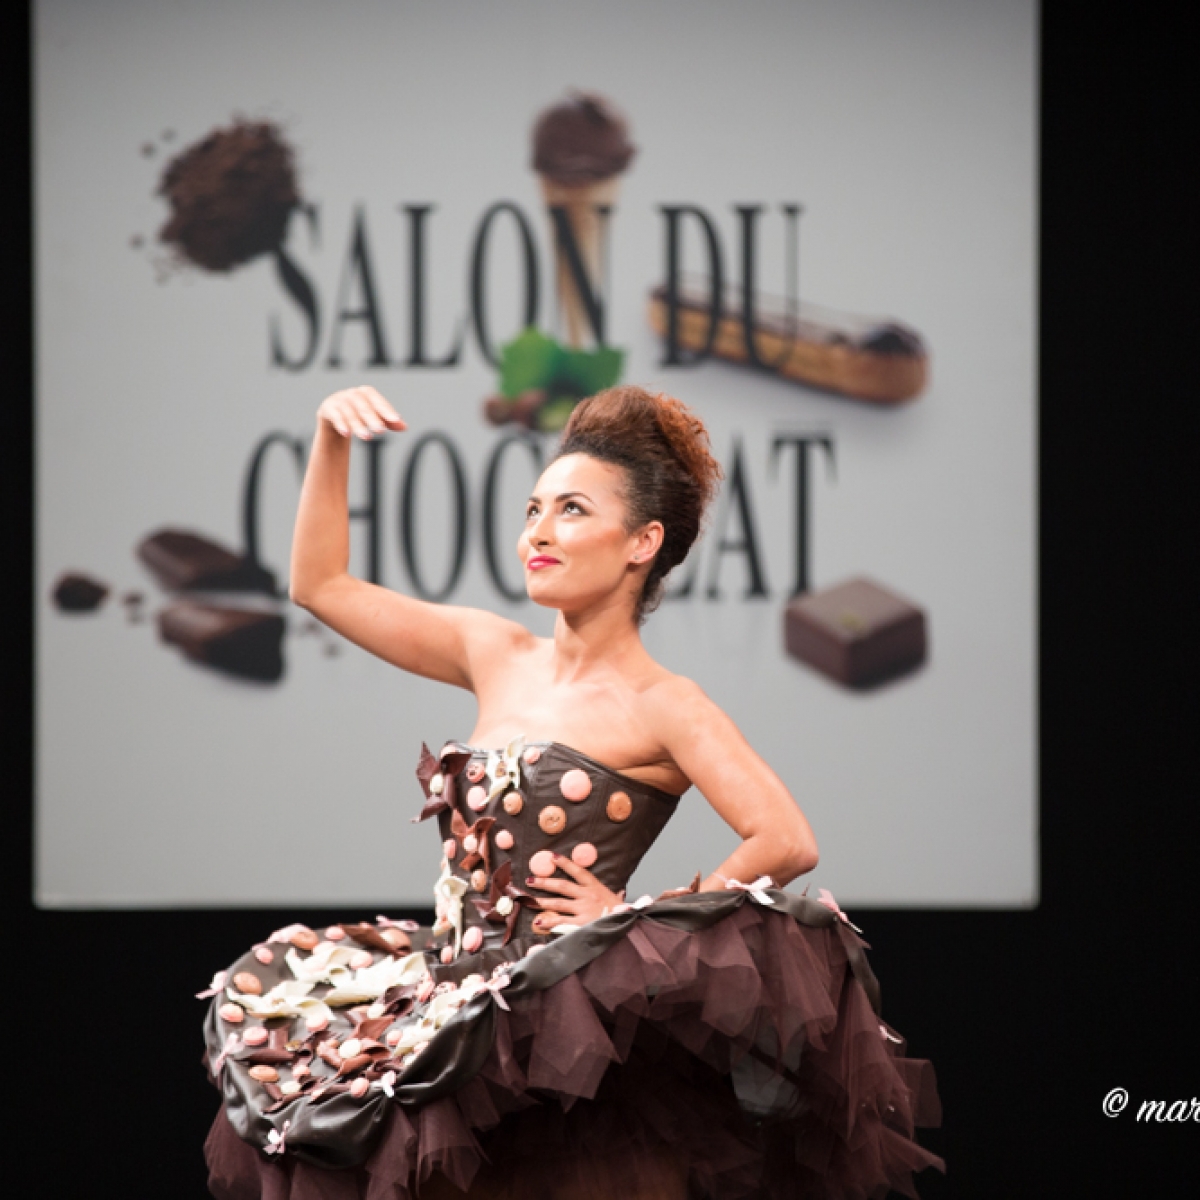 Hedia Charni du salon du chocolat marwan moussa